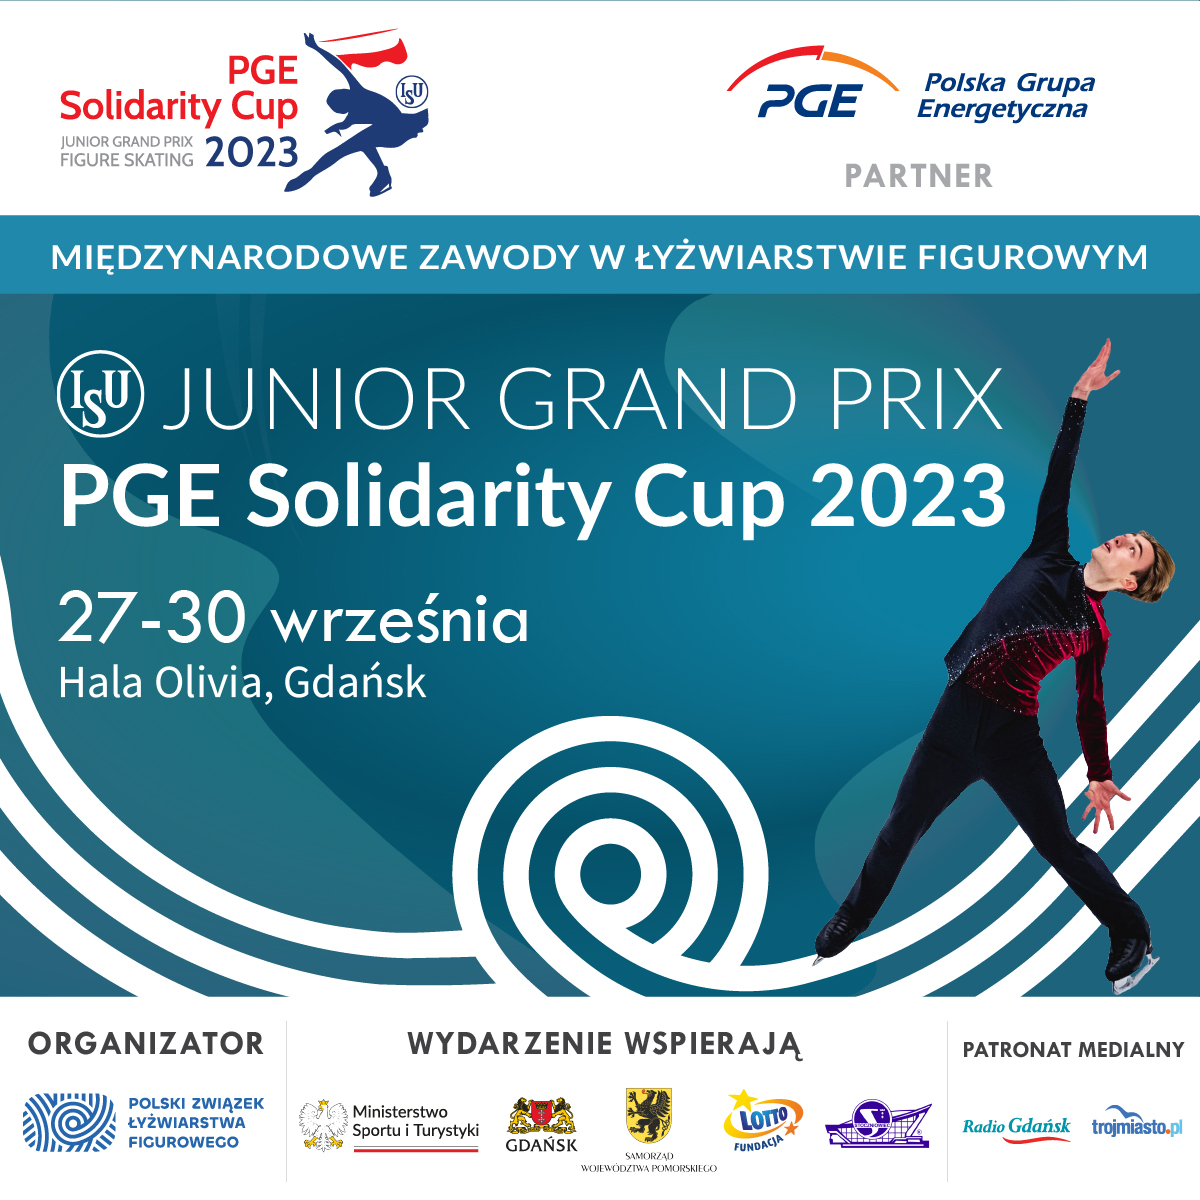 ISU Junior Grand Prix PGE Solidarity Cup 2023.